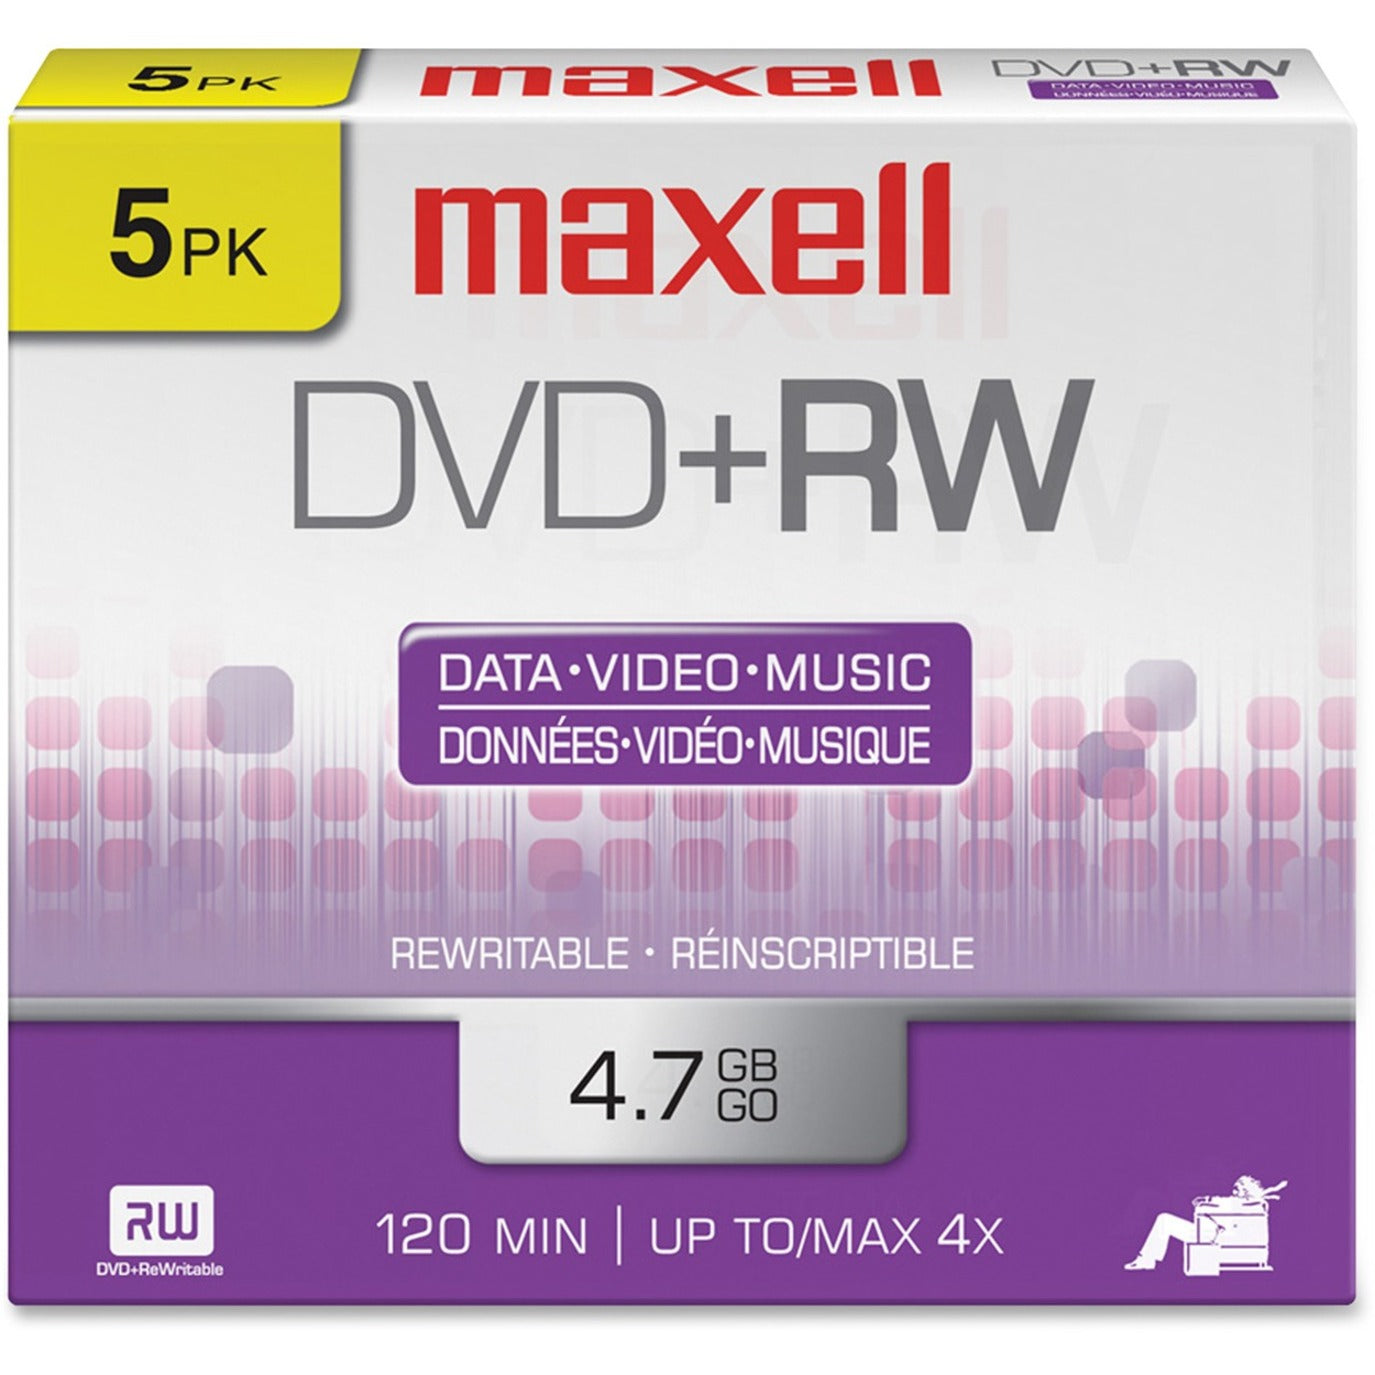 Maxell 634045 4x DVD+RW Media, 5 Pack, 4.70 GB Storage Capacity